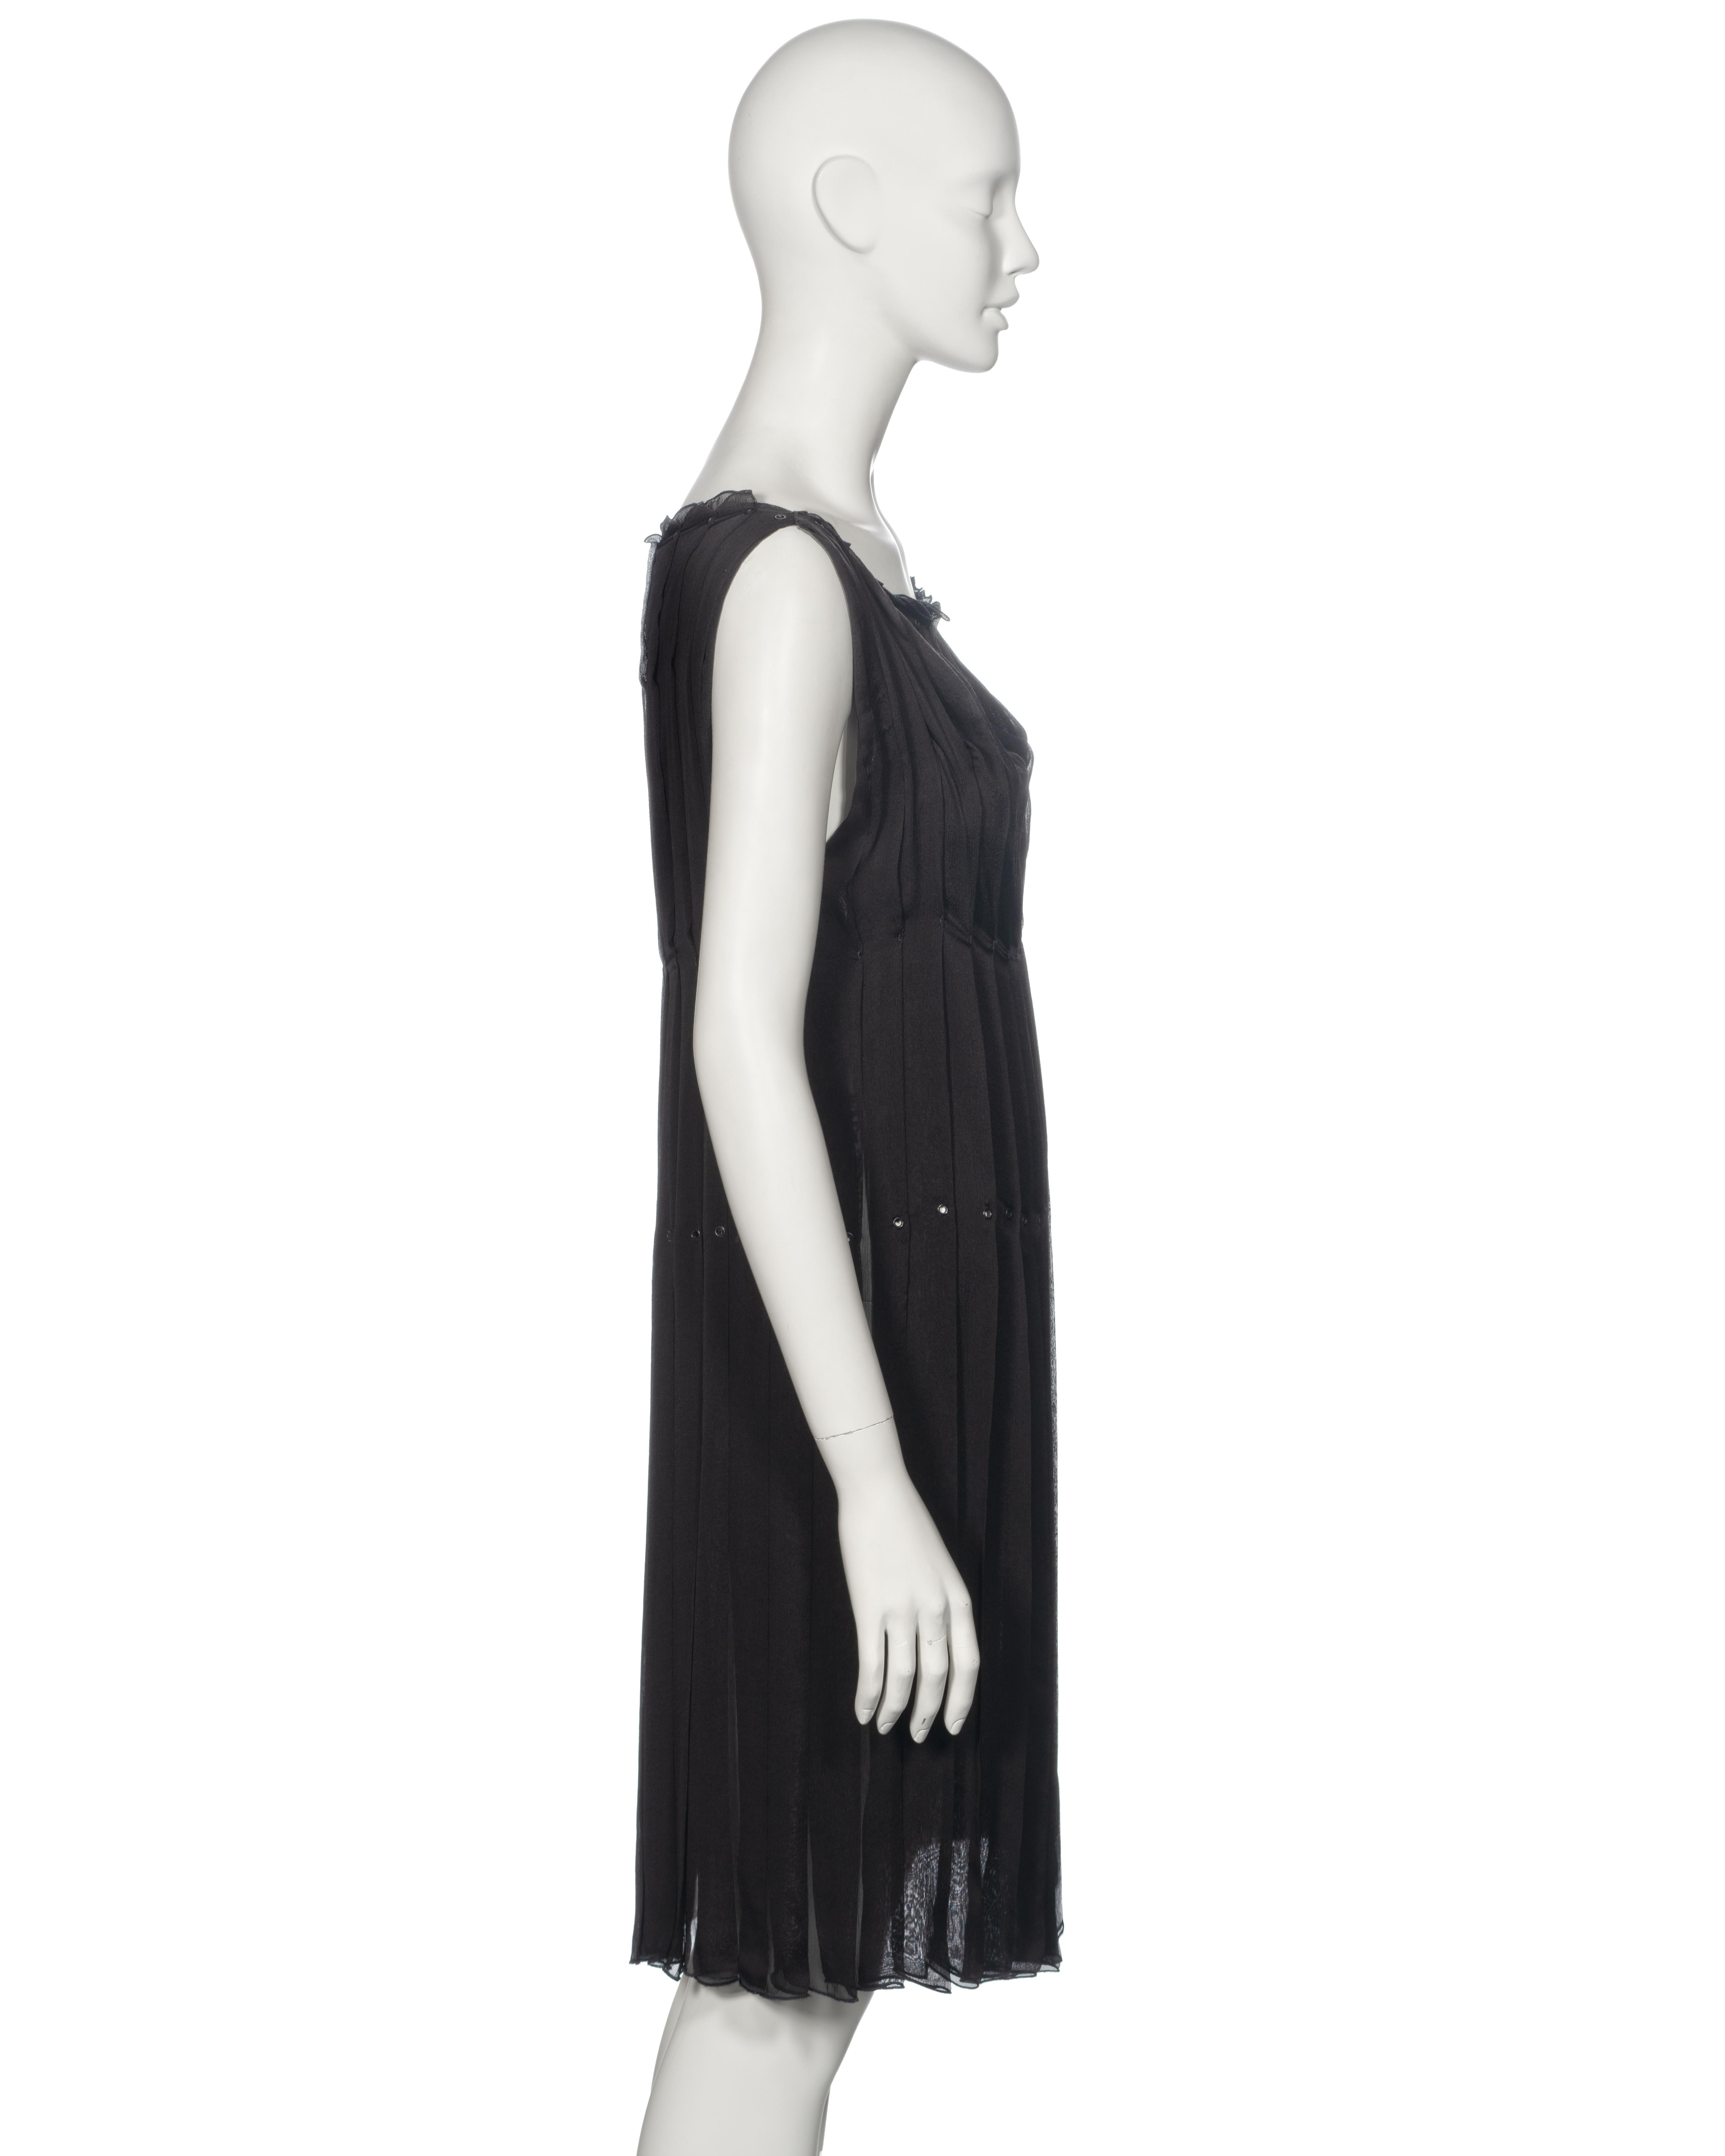 Prada by Miuccia Prada Black Silk Chiffon Box Pleated Shift Dress, ss 2000 For Sale 4